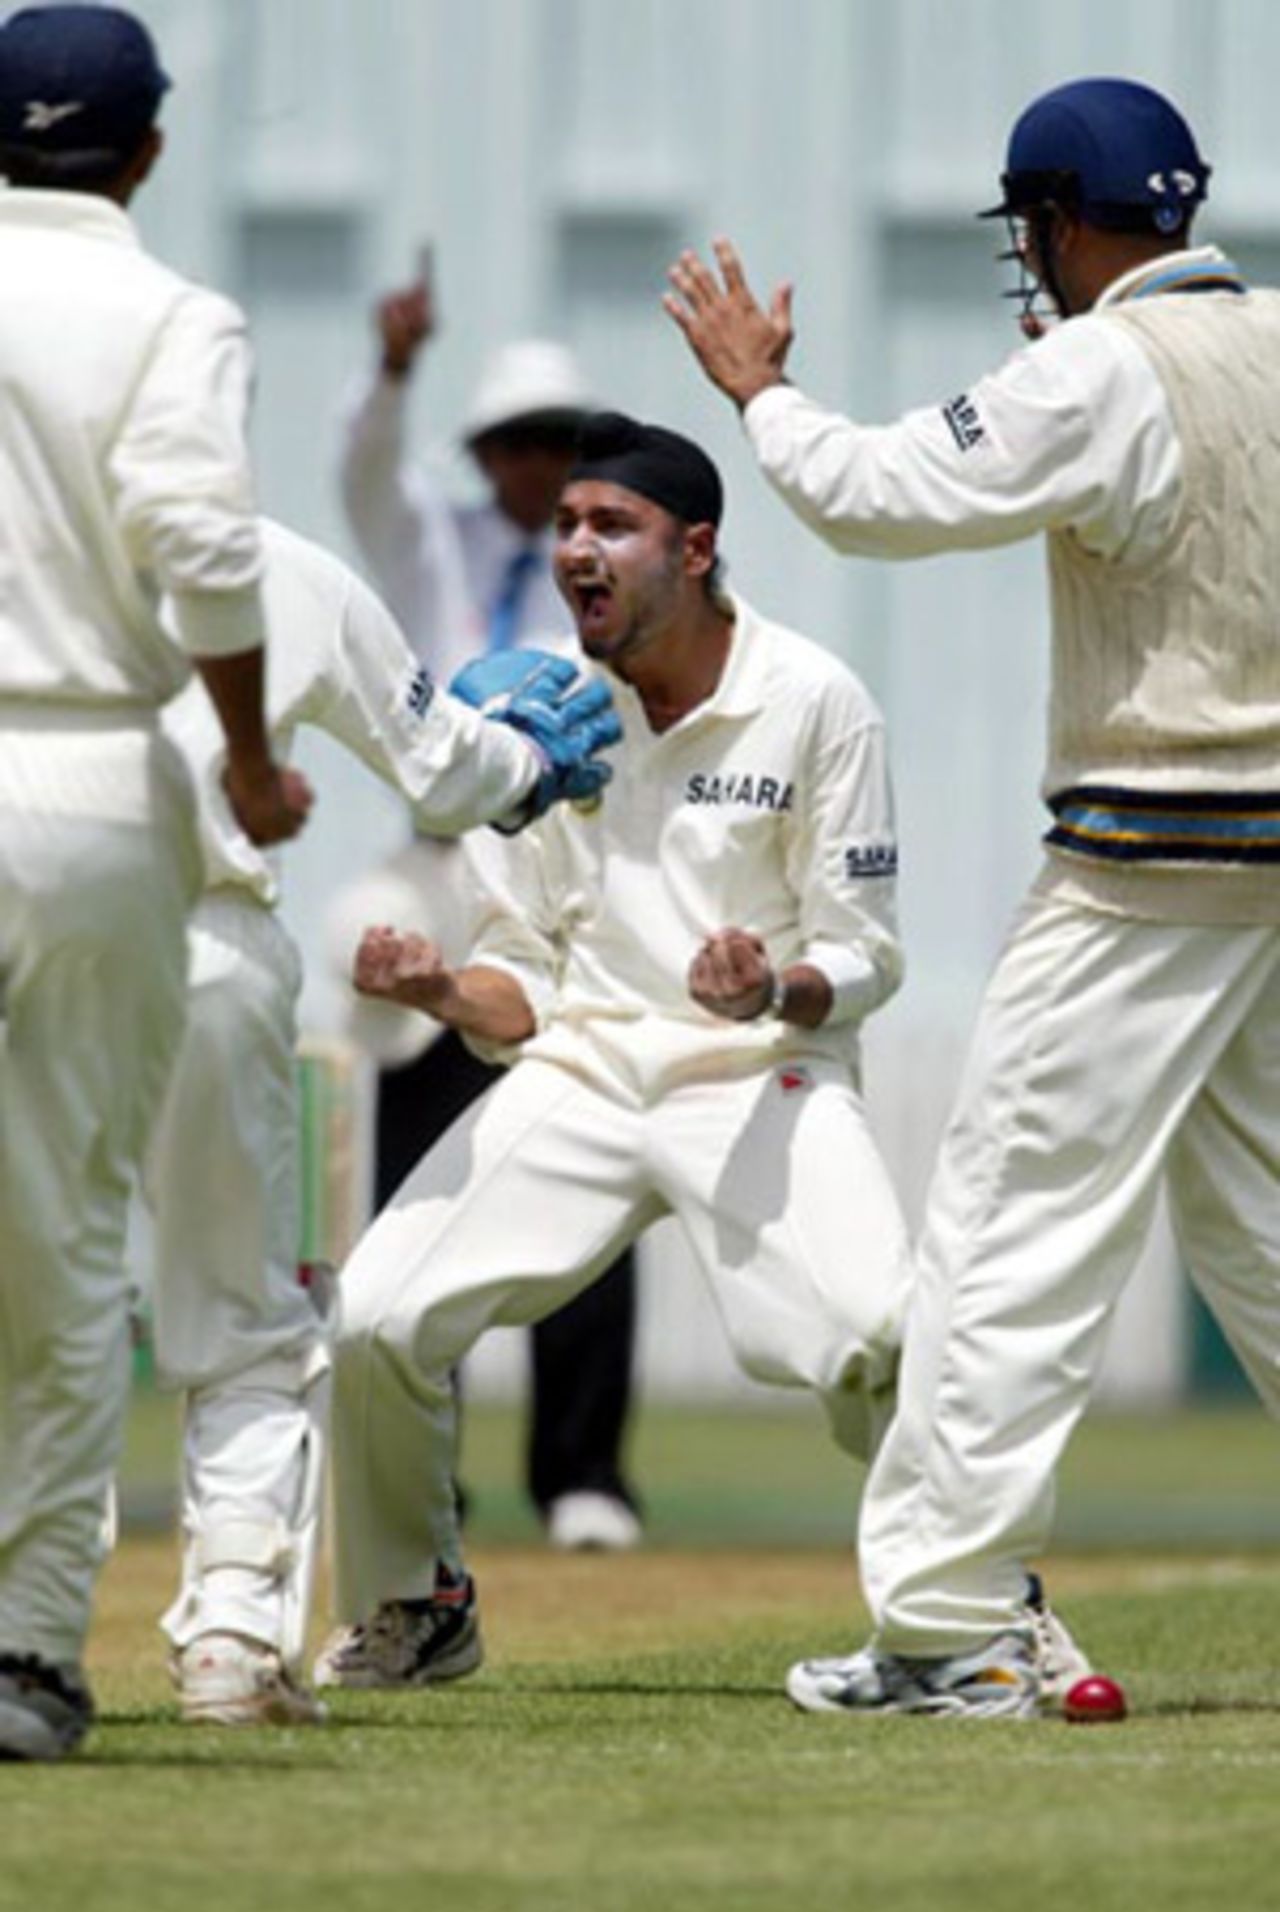 Indian bowler Harbhajan Singh celebrates the dismissal of New Zealand batsman Scott Styris, lbw to Harbhajan for 13 in his first innings. 2nd Test: New Zealand v India at Westpac Park, Hamilton, 19-23 December 2002 (21 December 2002).